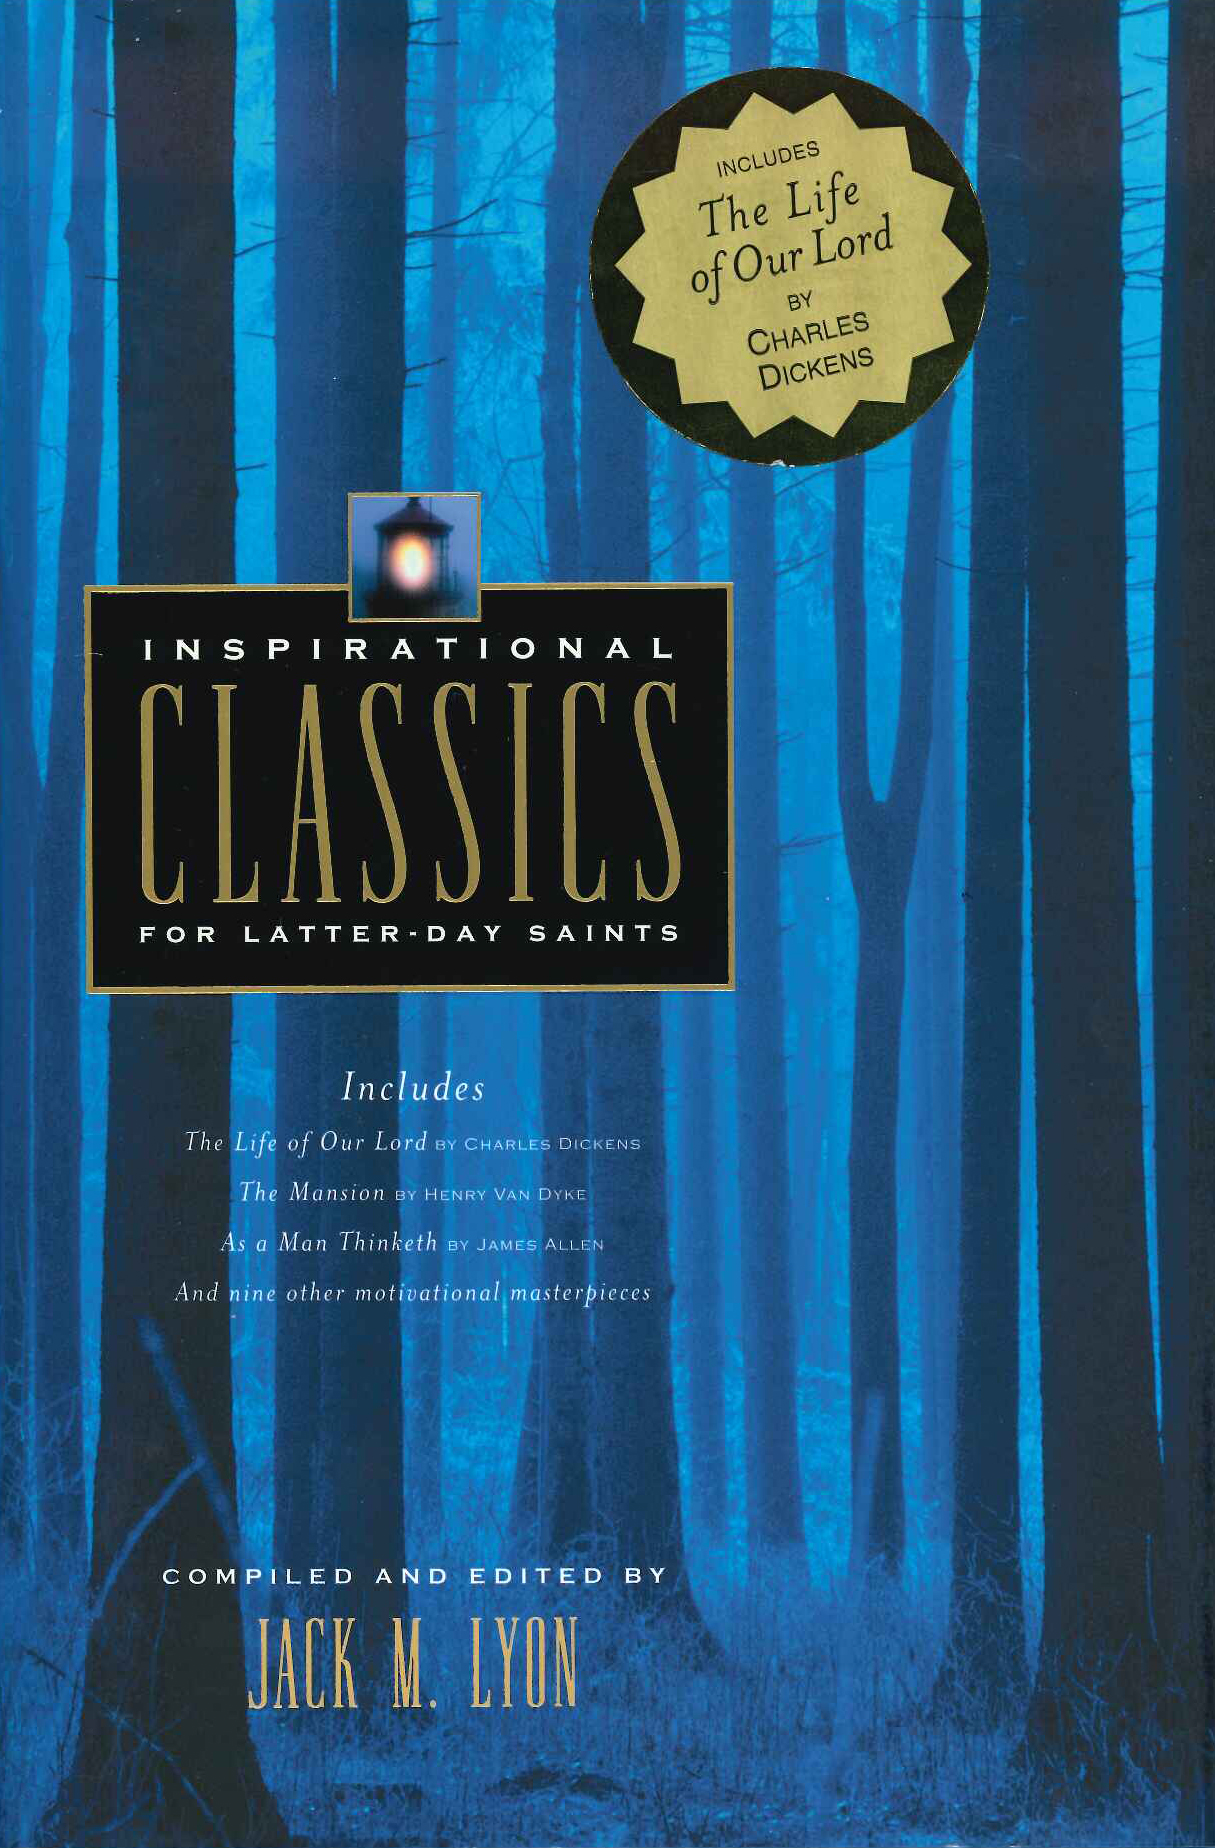 Inspirational Classics for Latter-day Saints Jack M Lyon 2000 Deseret Book - photo 1